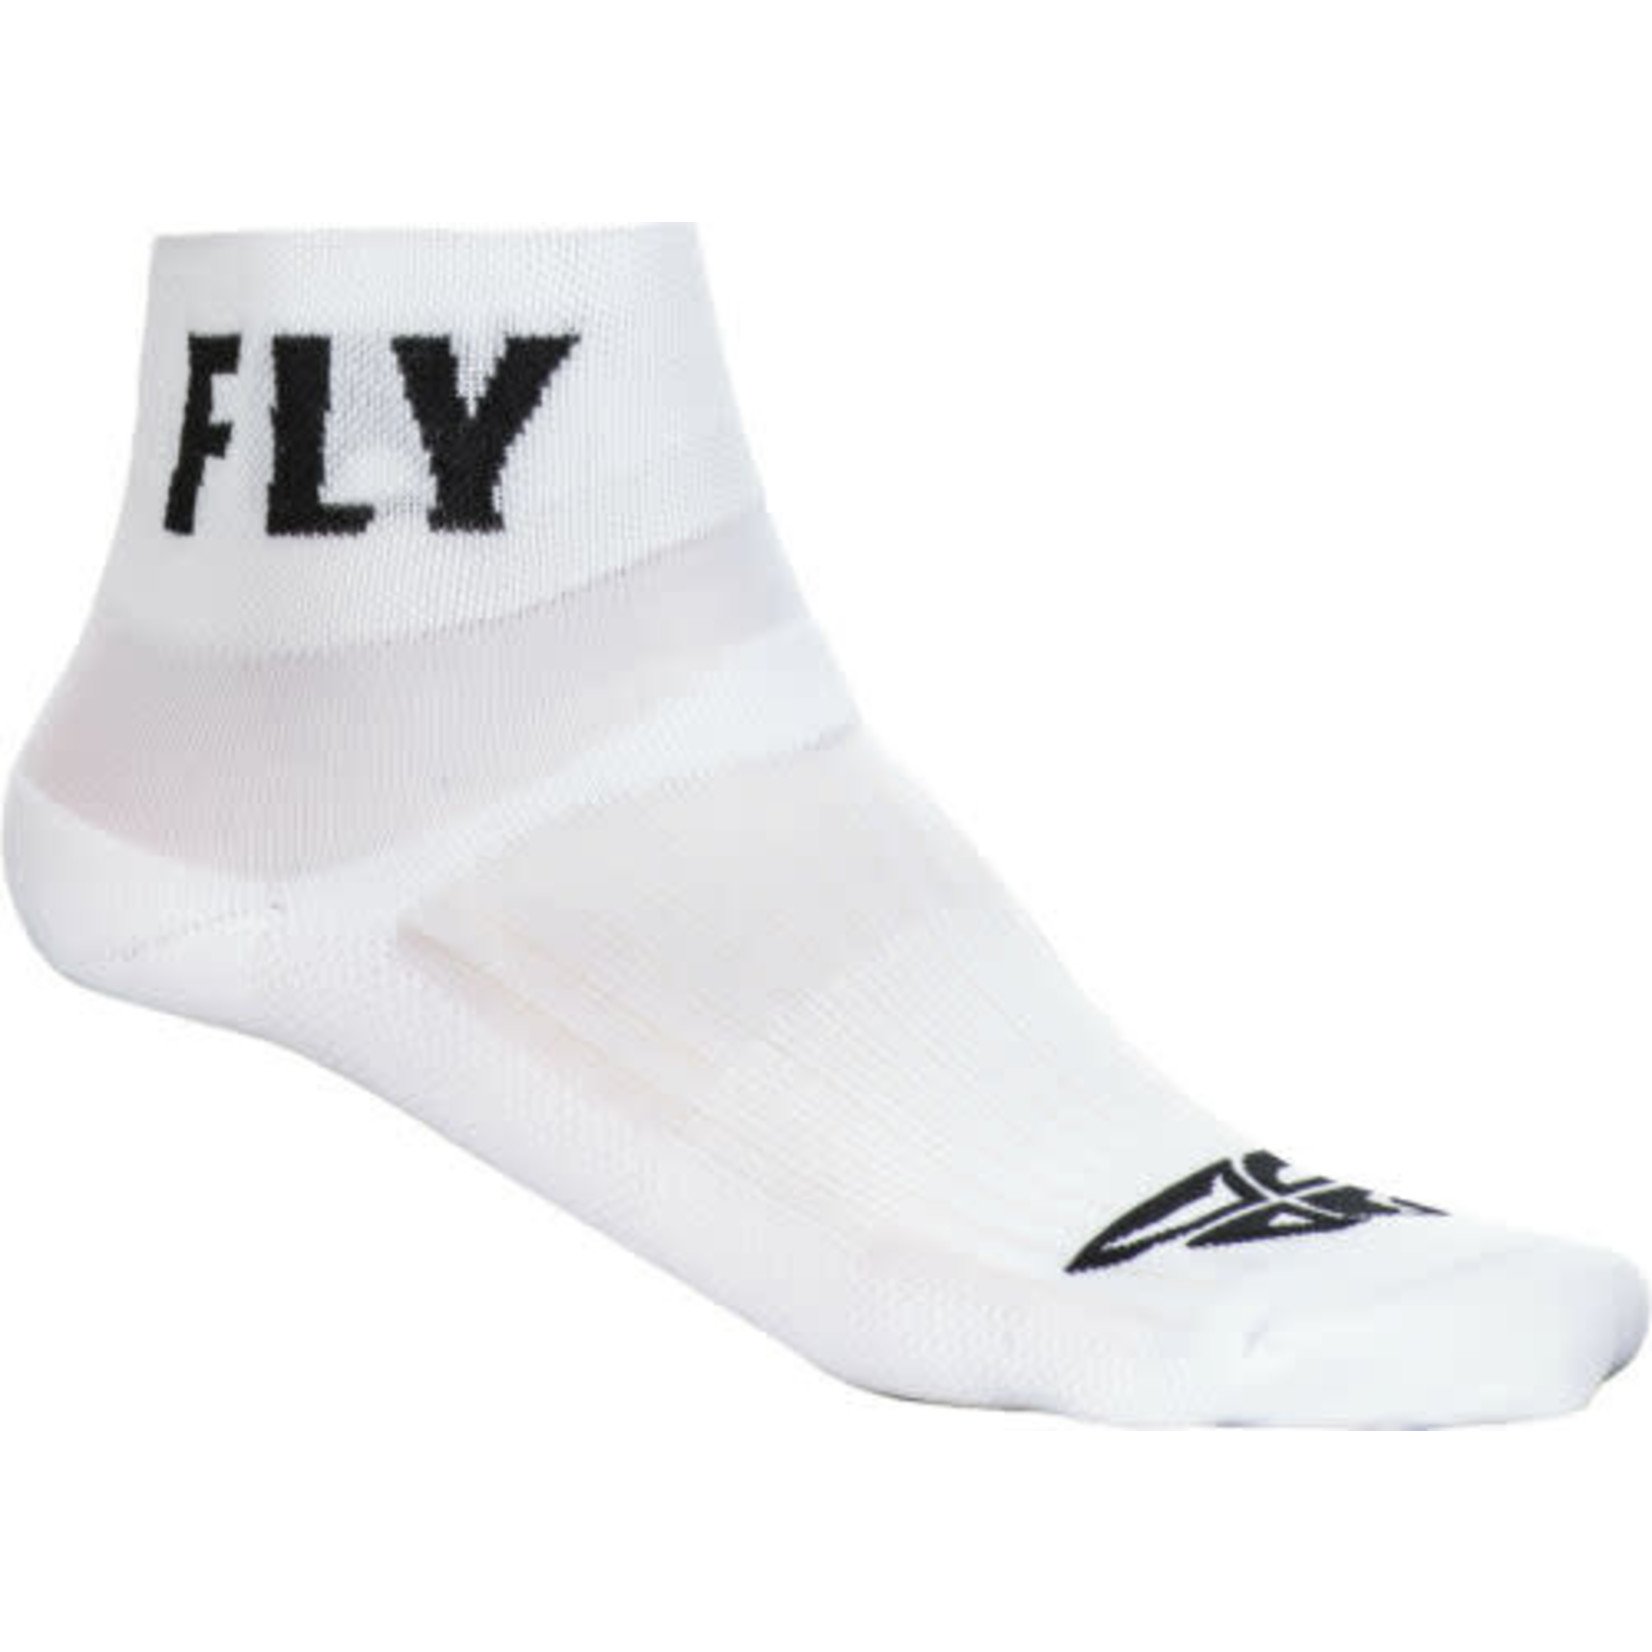 FLY RACING FLY SHORTY SOCKS WHITE LG/XL